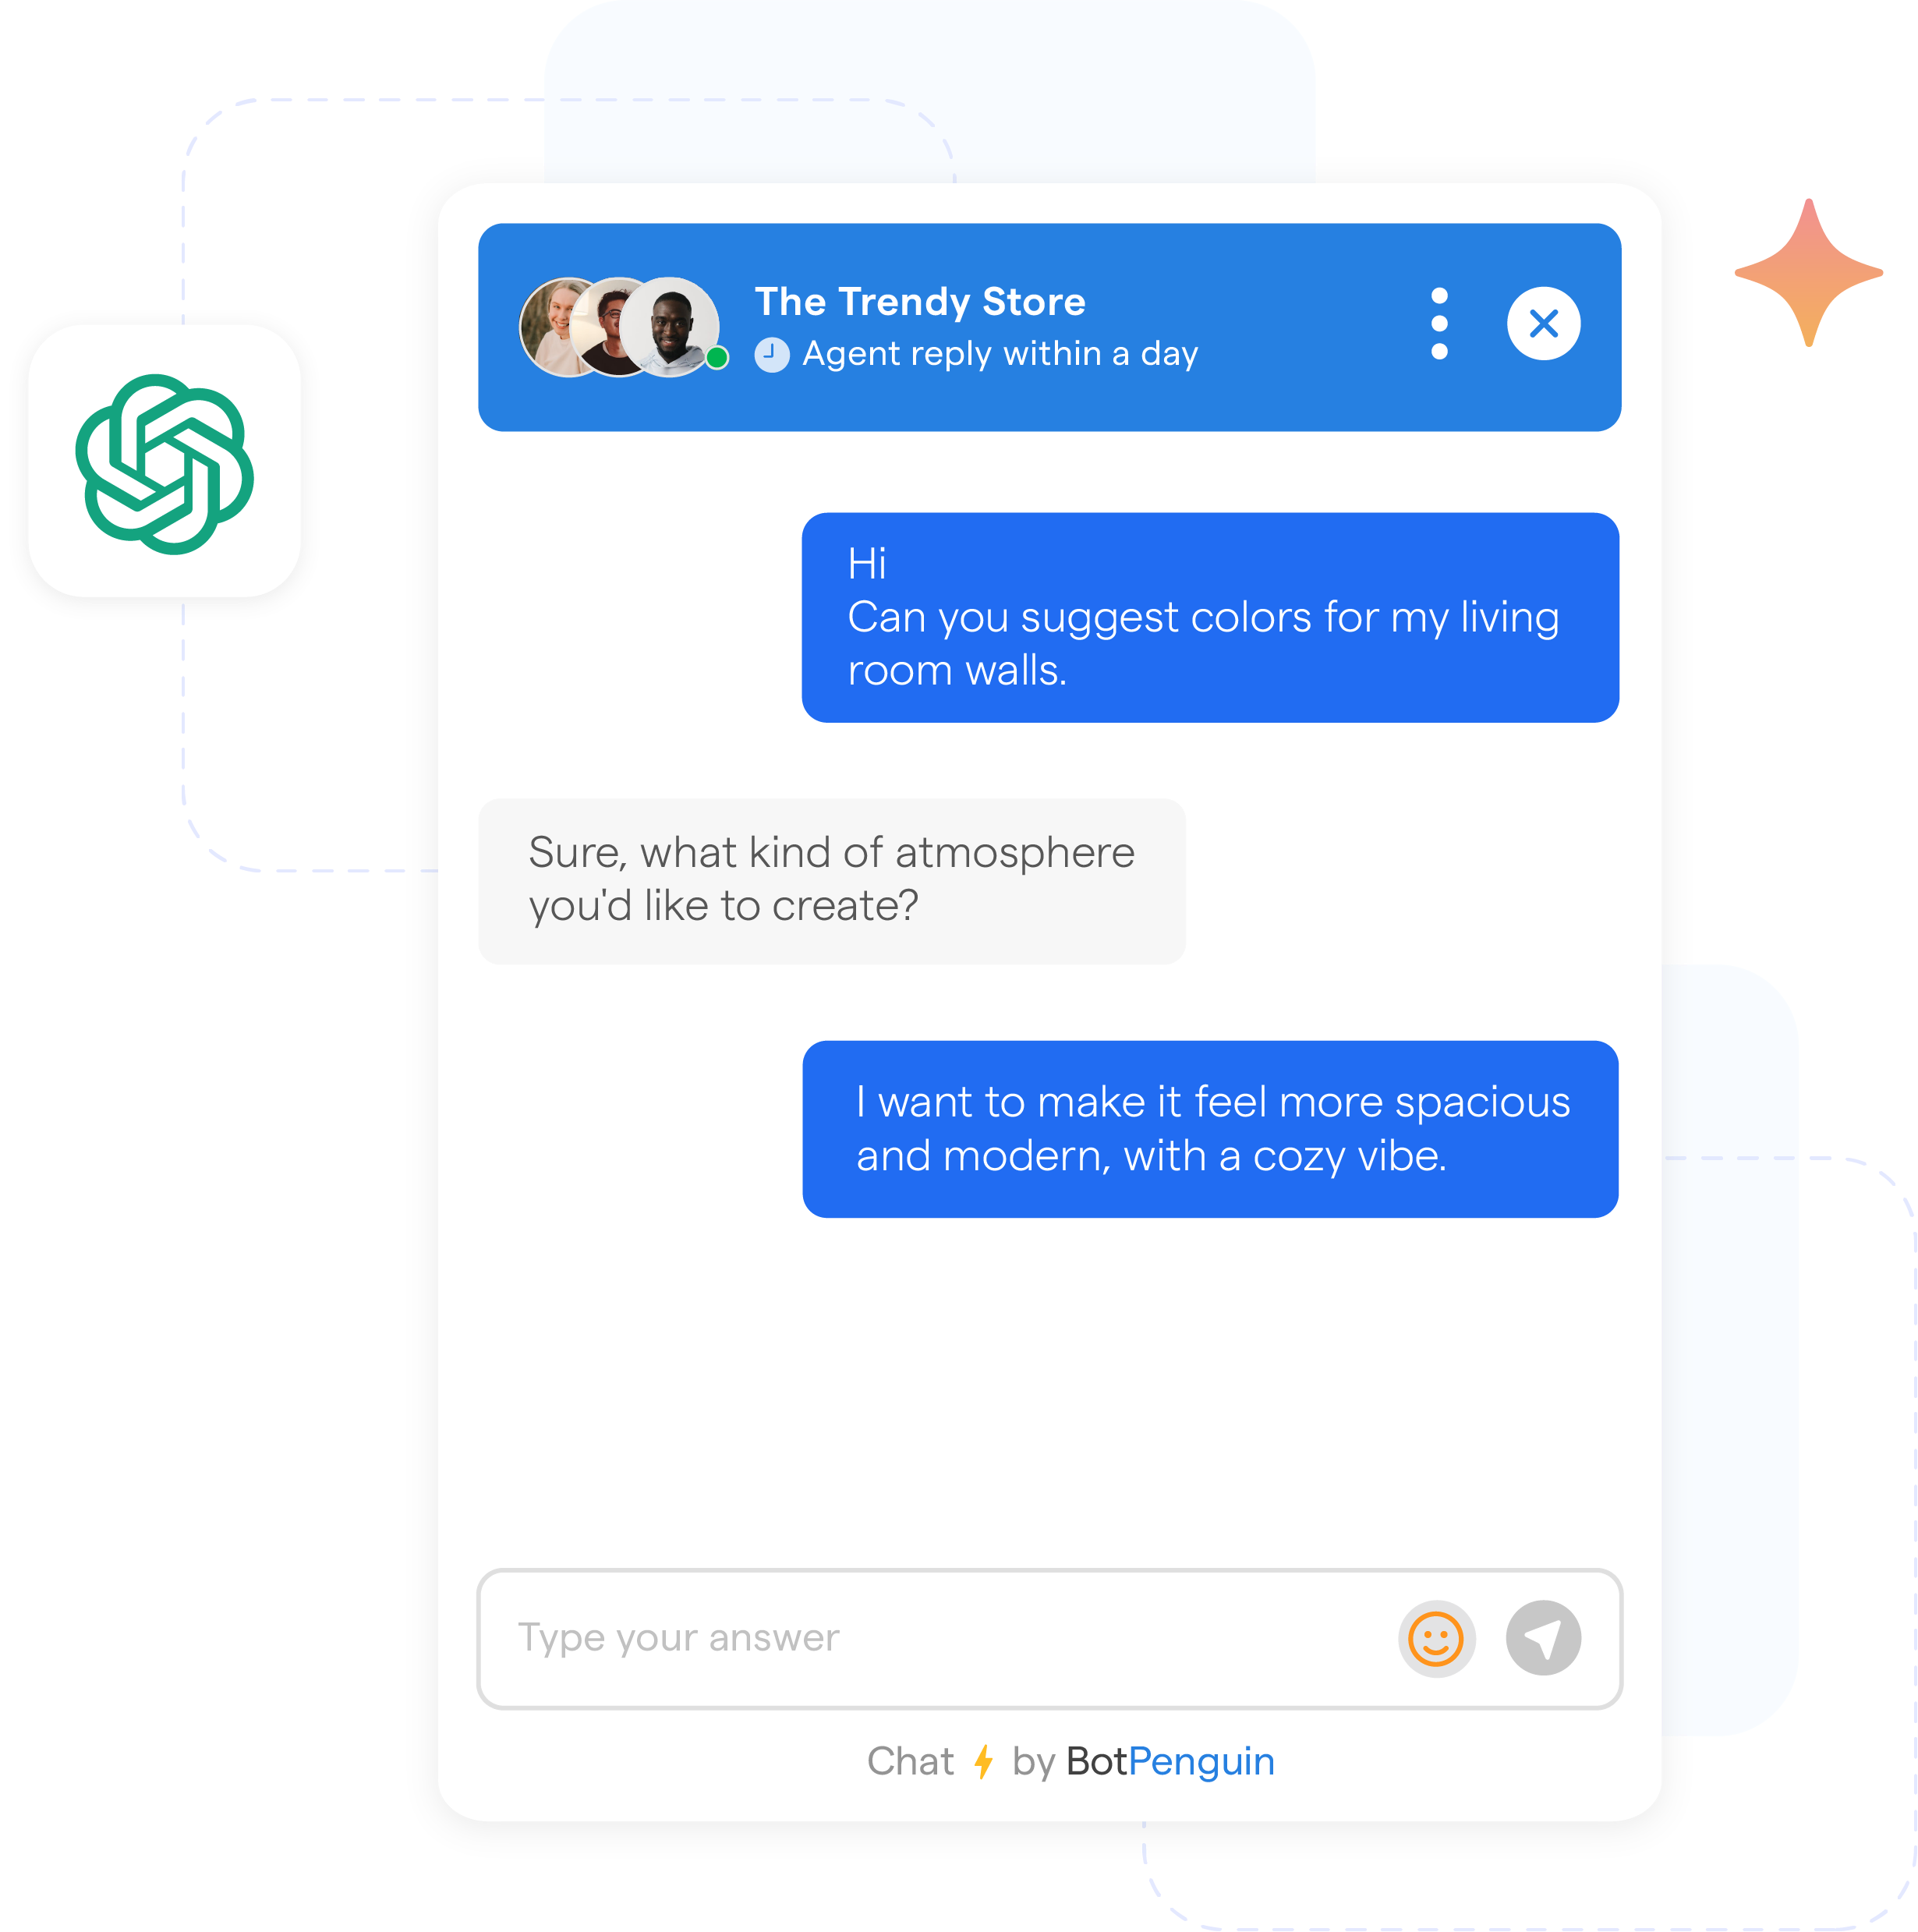 Integrating GPT model in your chatbot